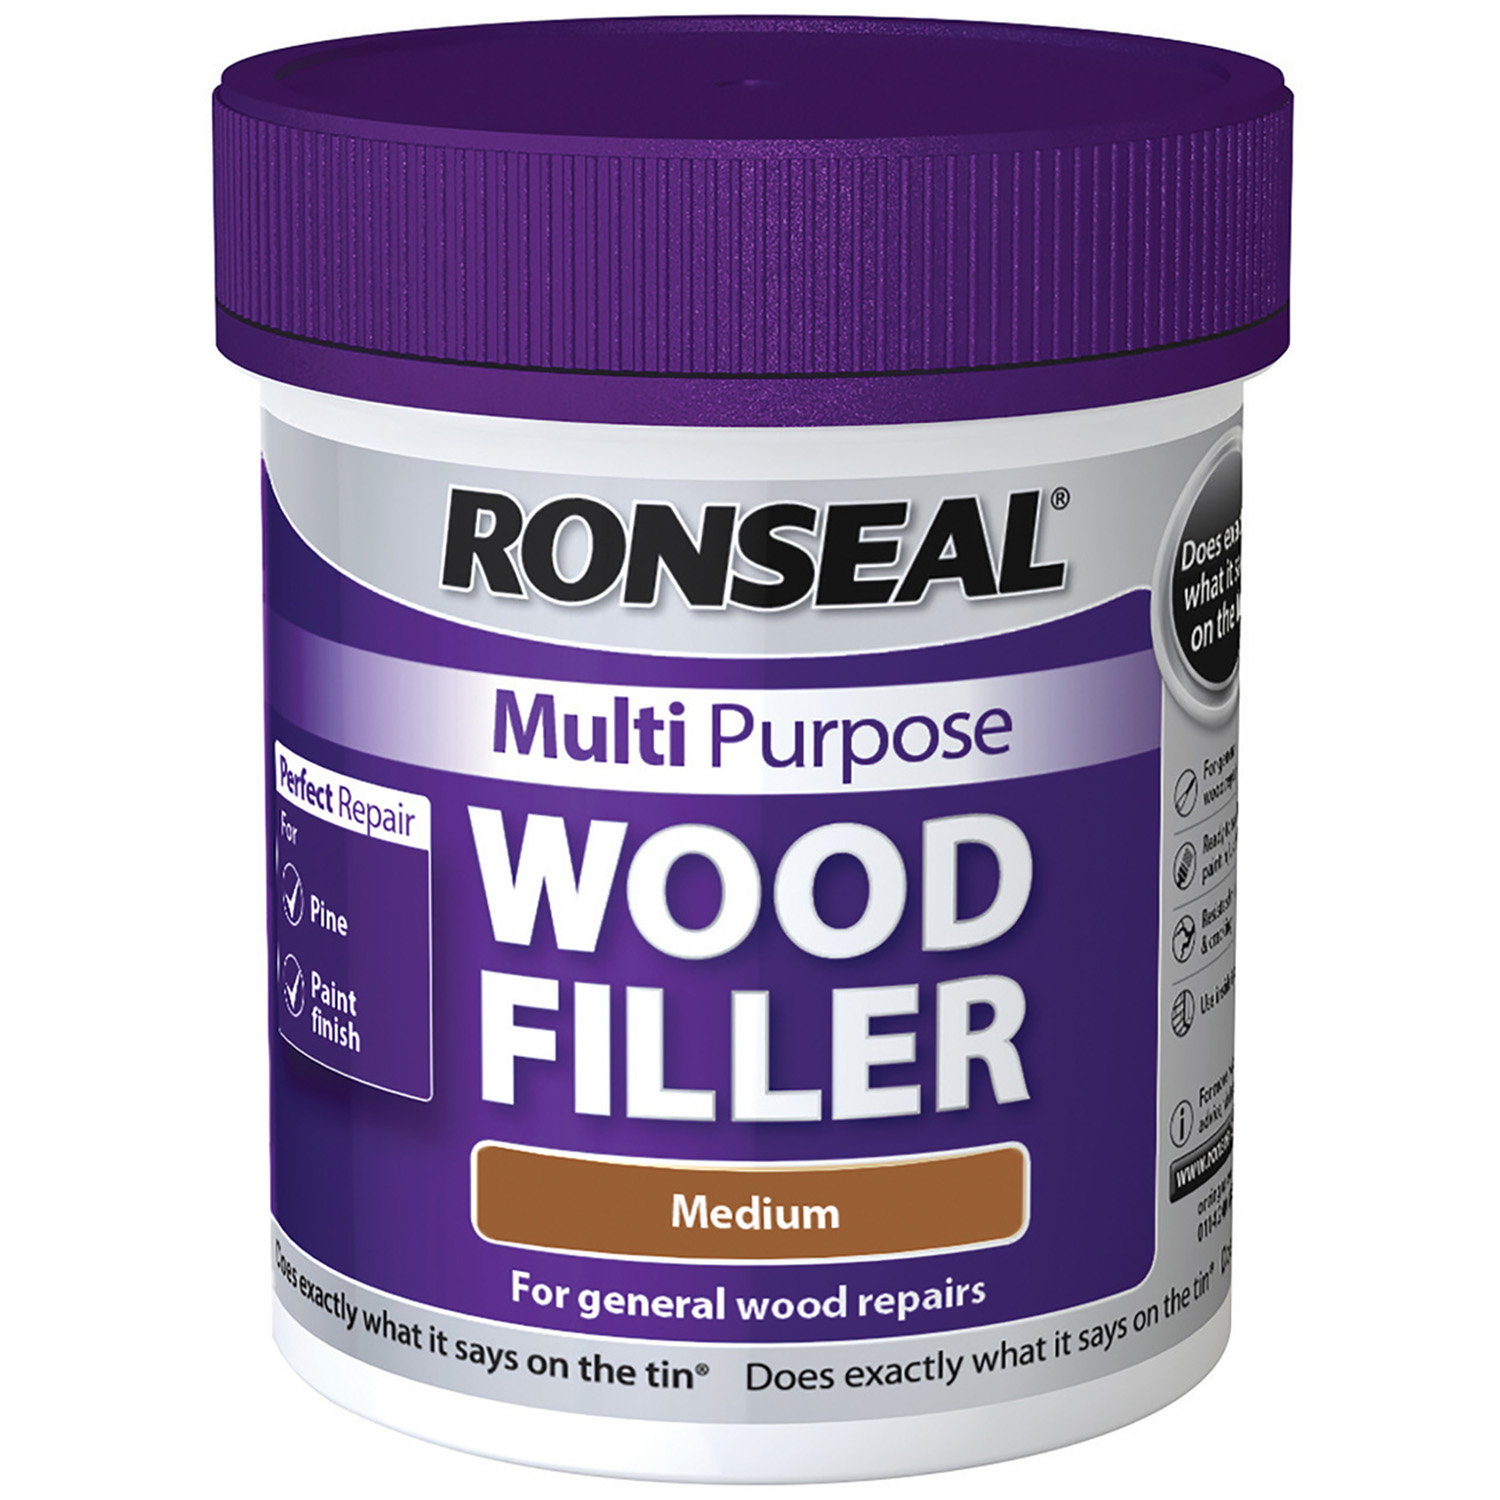 Ronseal Multi Purpose Medium Wood Filler 250g Image